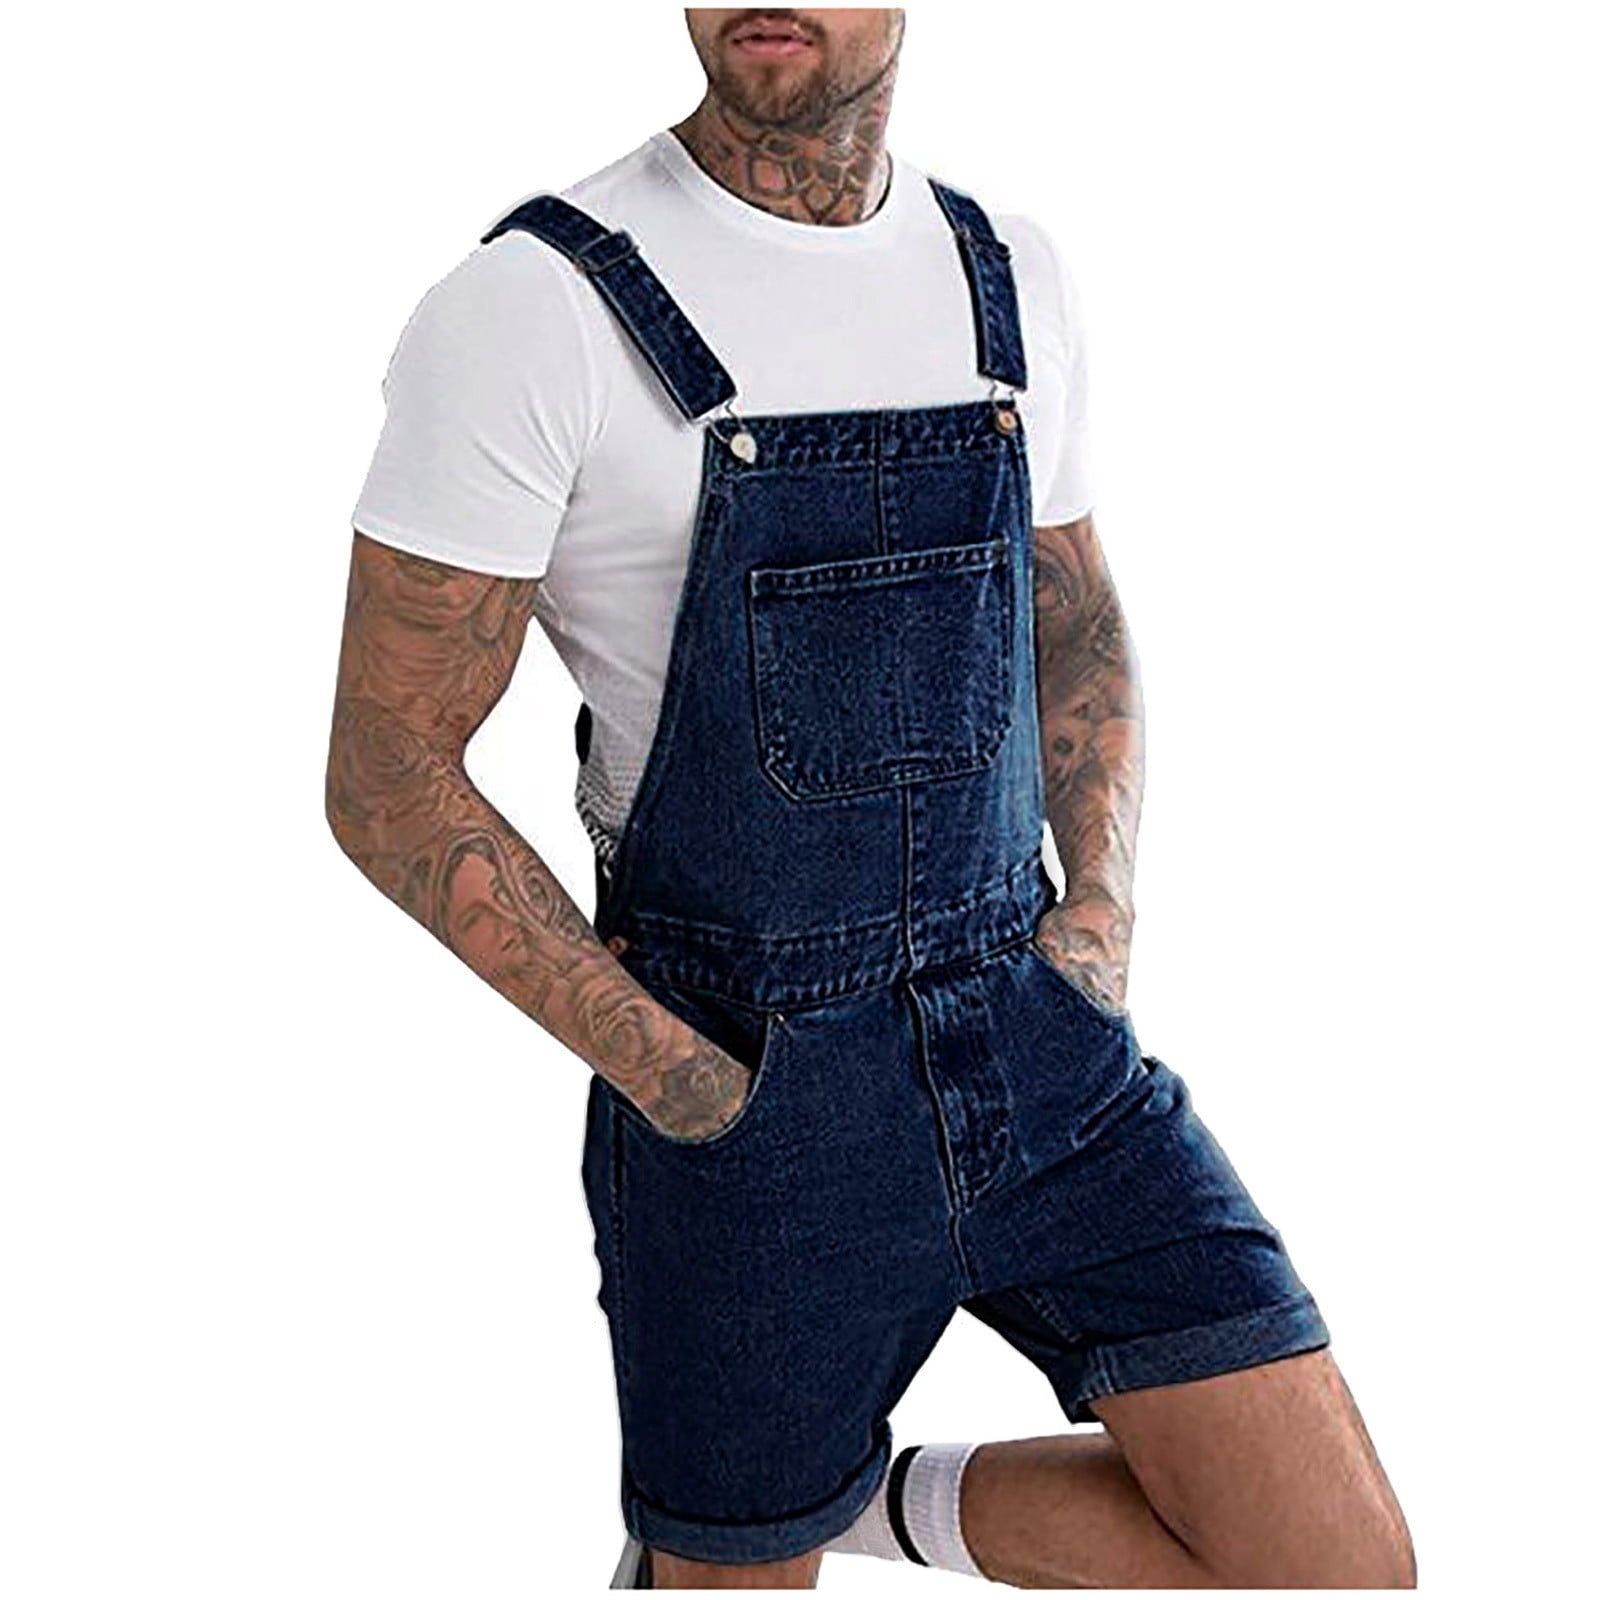 CASUAL MEN DENIM Overalls Jumpsuits Slim Fit Pants Skinny Jeans Fashion  Trousers $76.12 - PicClick